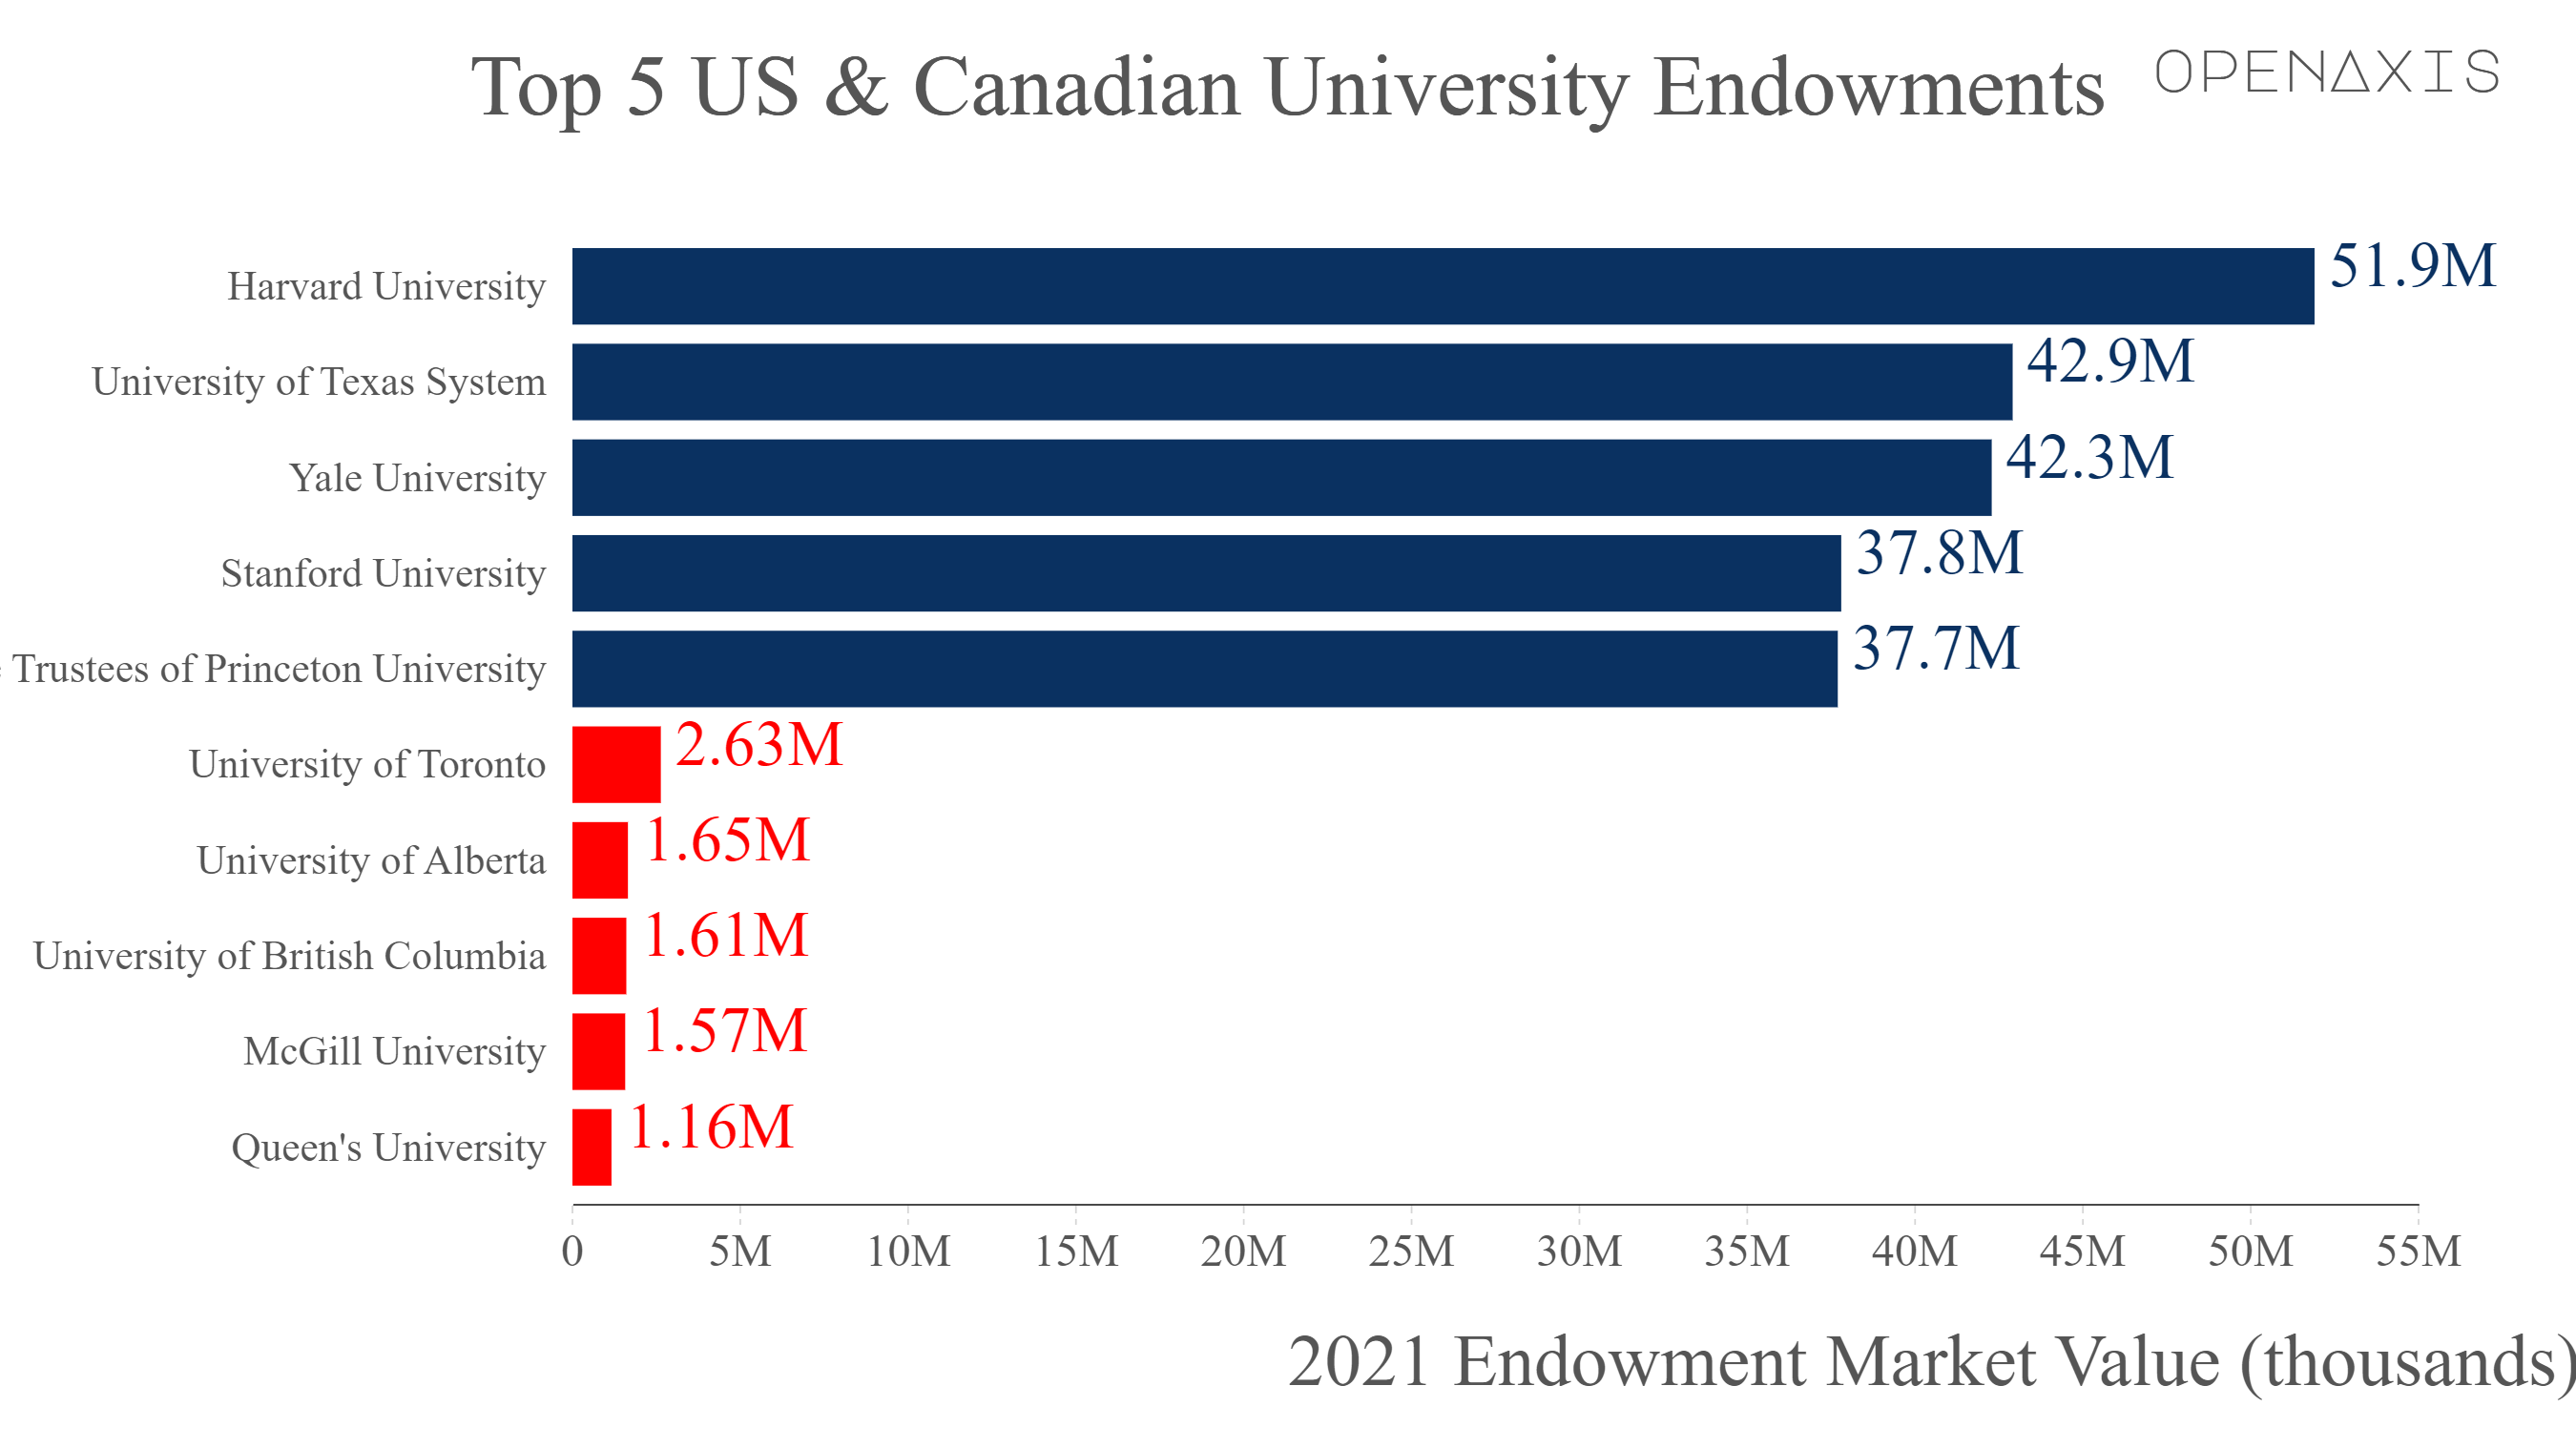 "Top 5 US & Canadian University Endowments"